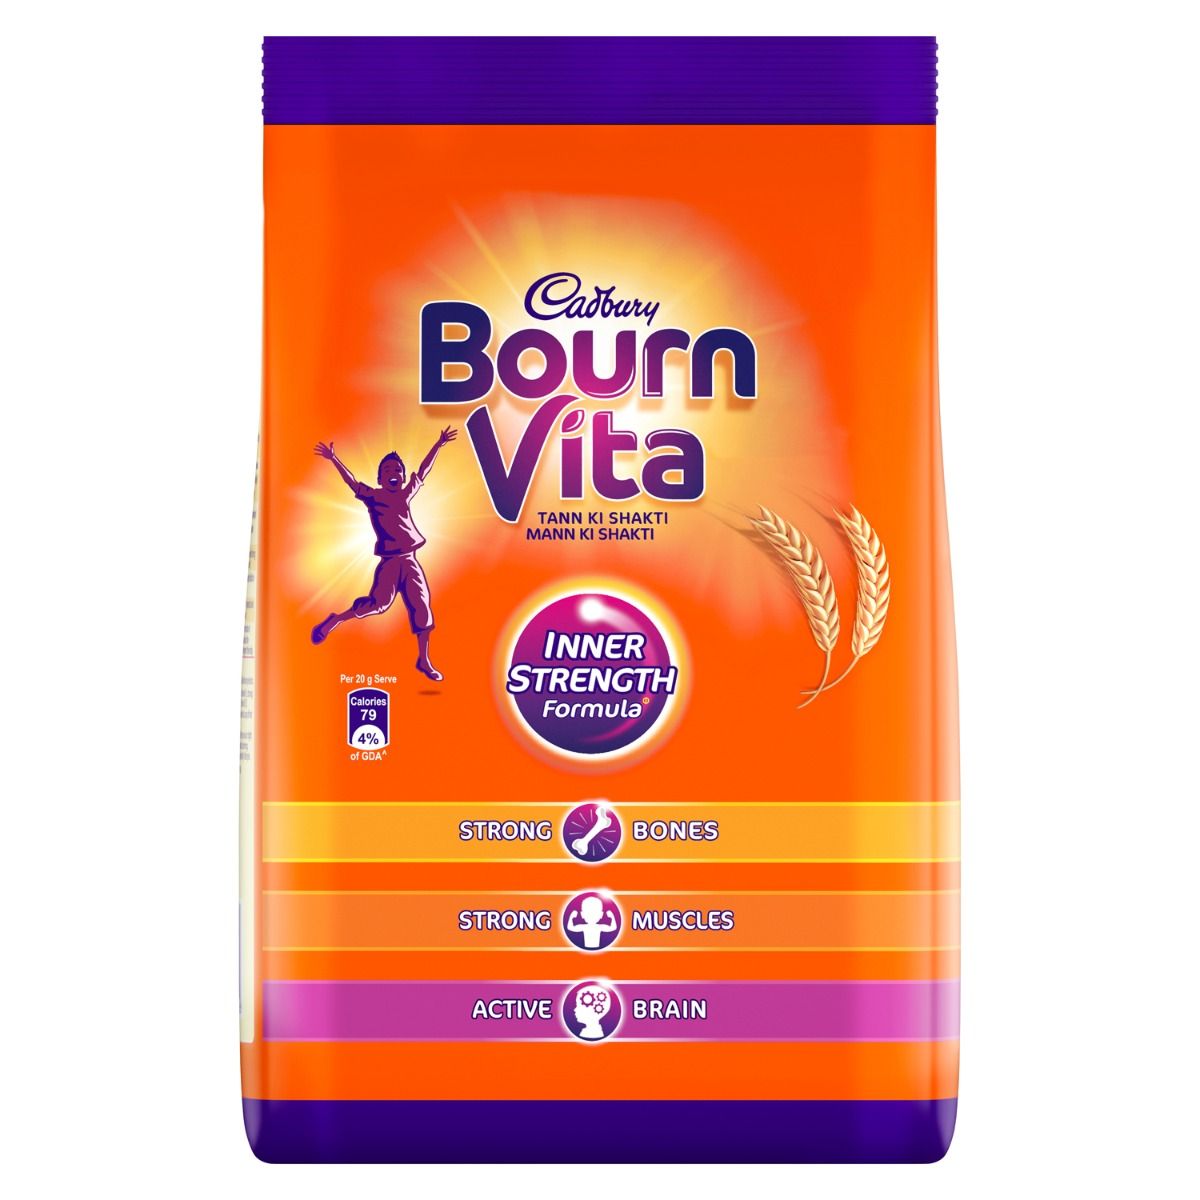 Cadbury Bournvita Nutrition Drink Powder, 750 gm Refill Pack, Pack of 1 